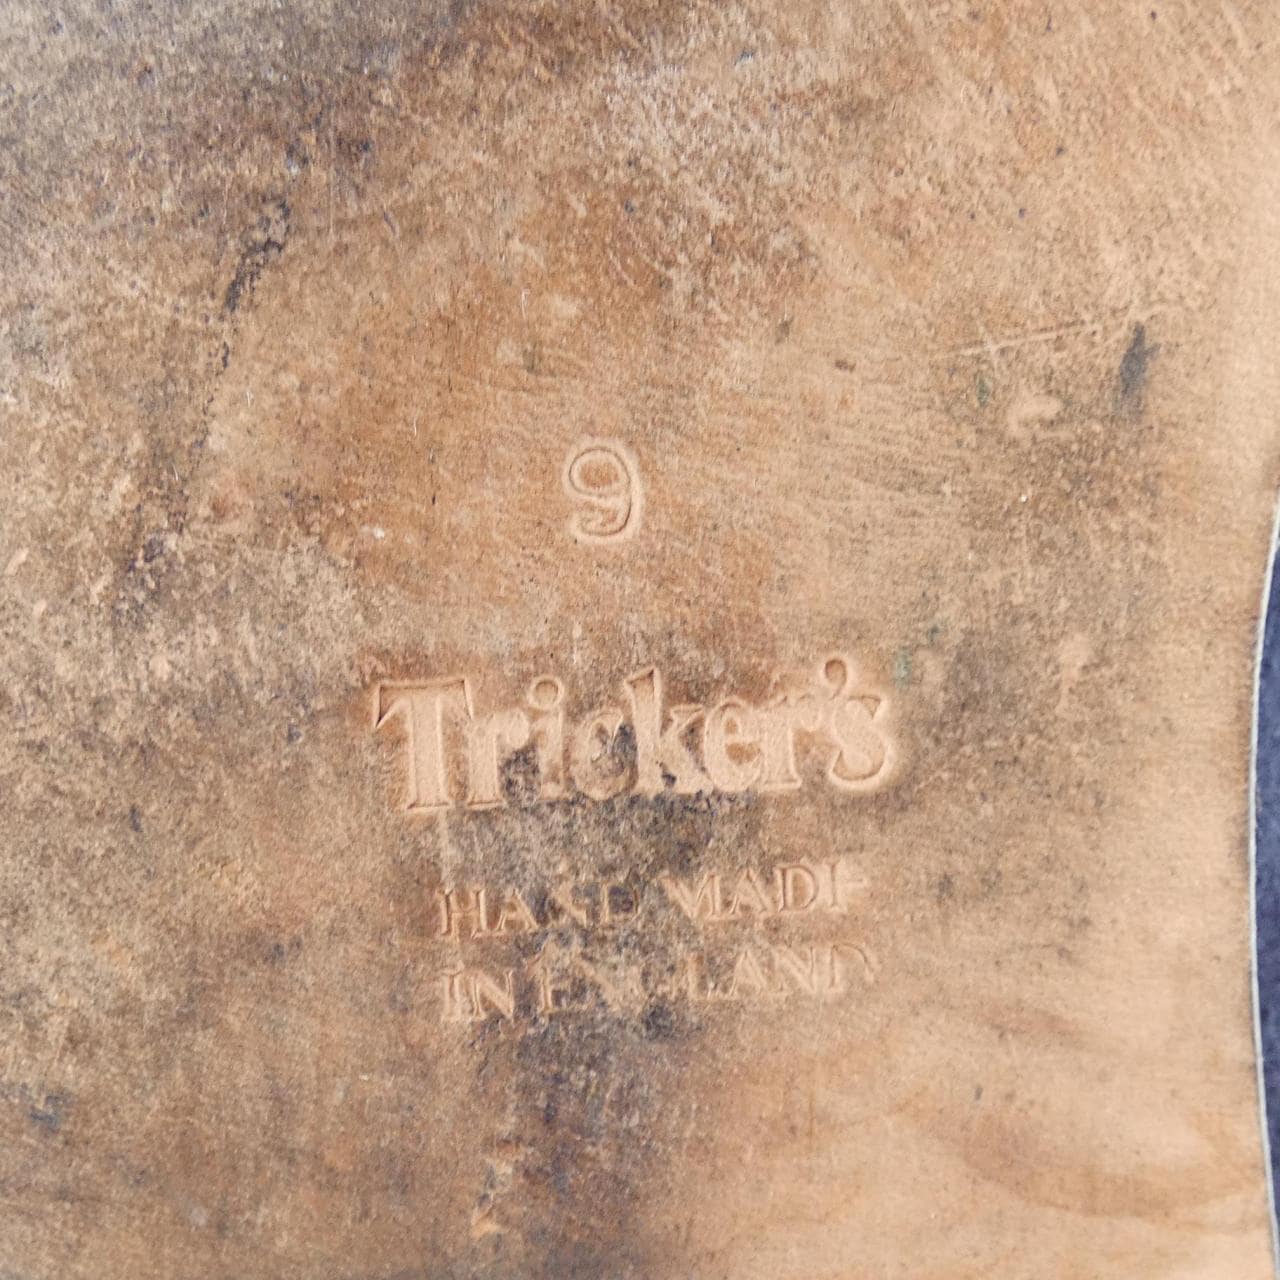 TrikersTricker's鞋